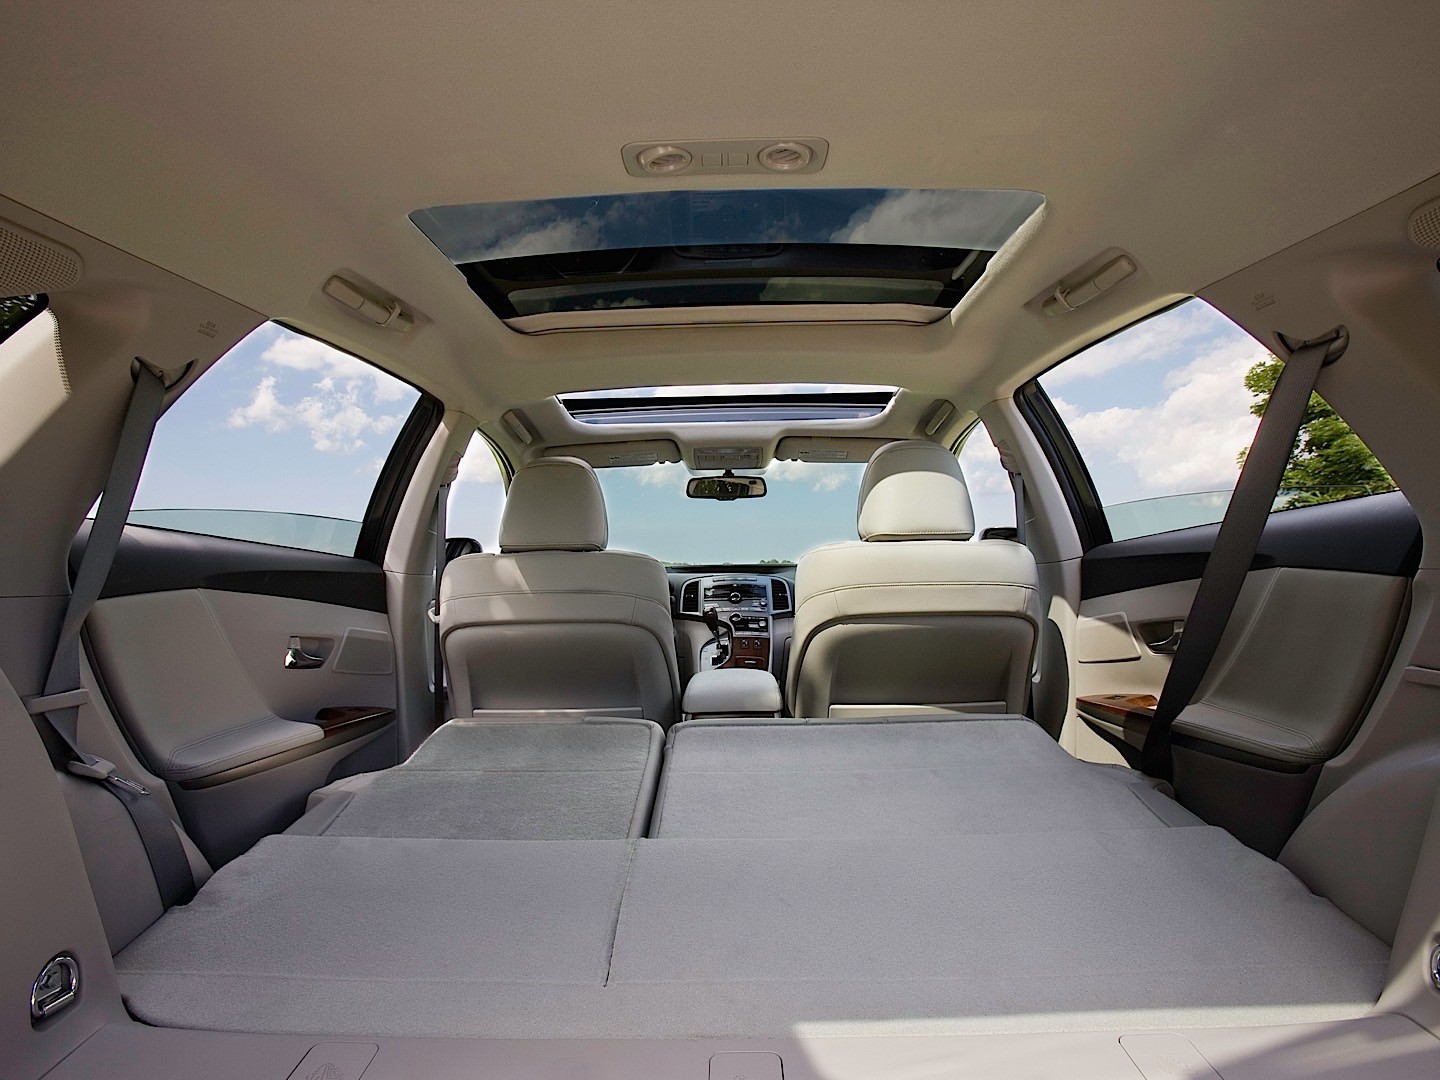 2014 Toyota Venza Interior Dimensions Wiring Diagrams